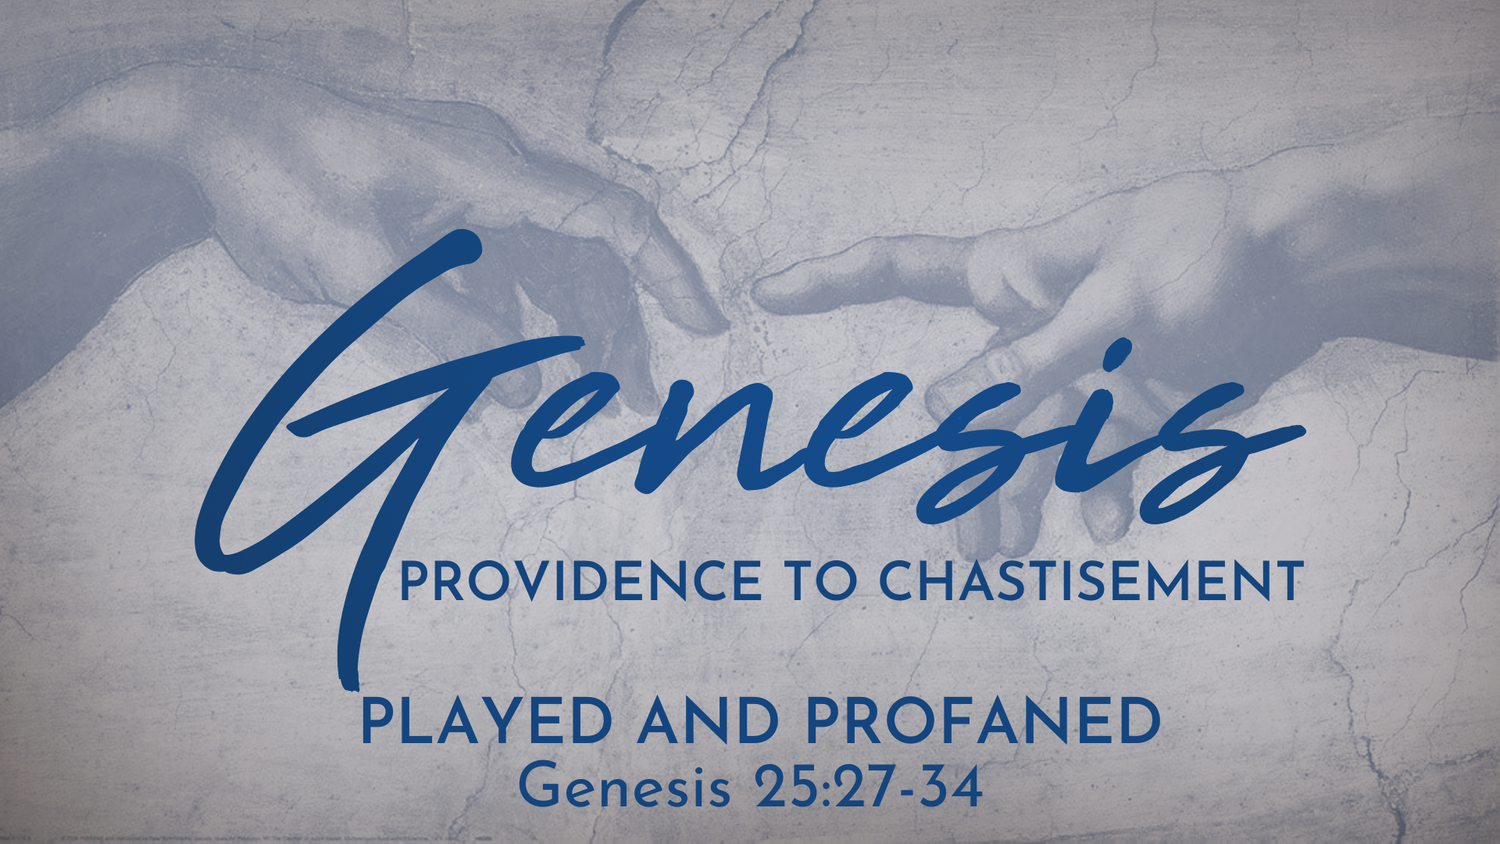 Played and Profaned (Genesis 25:27-34)